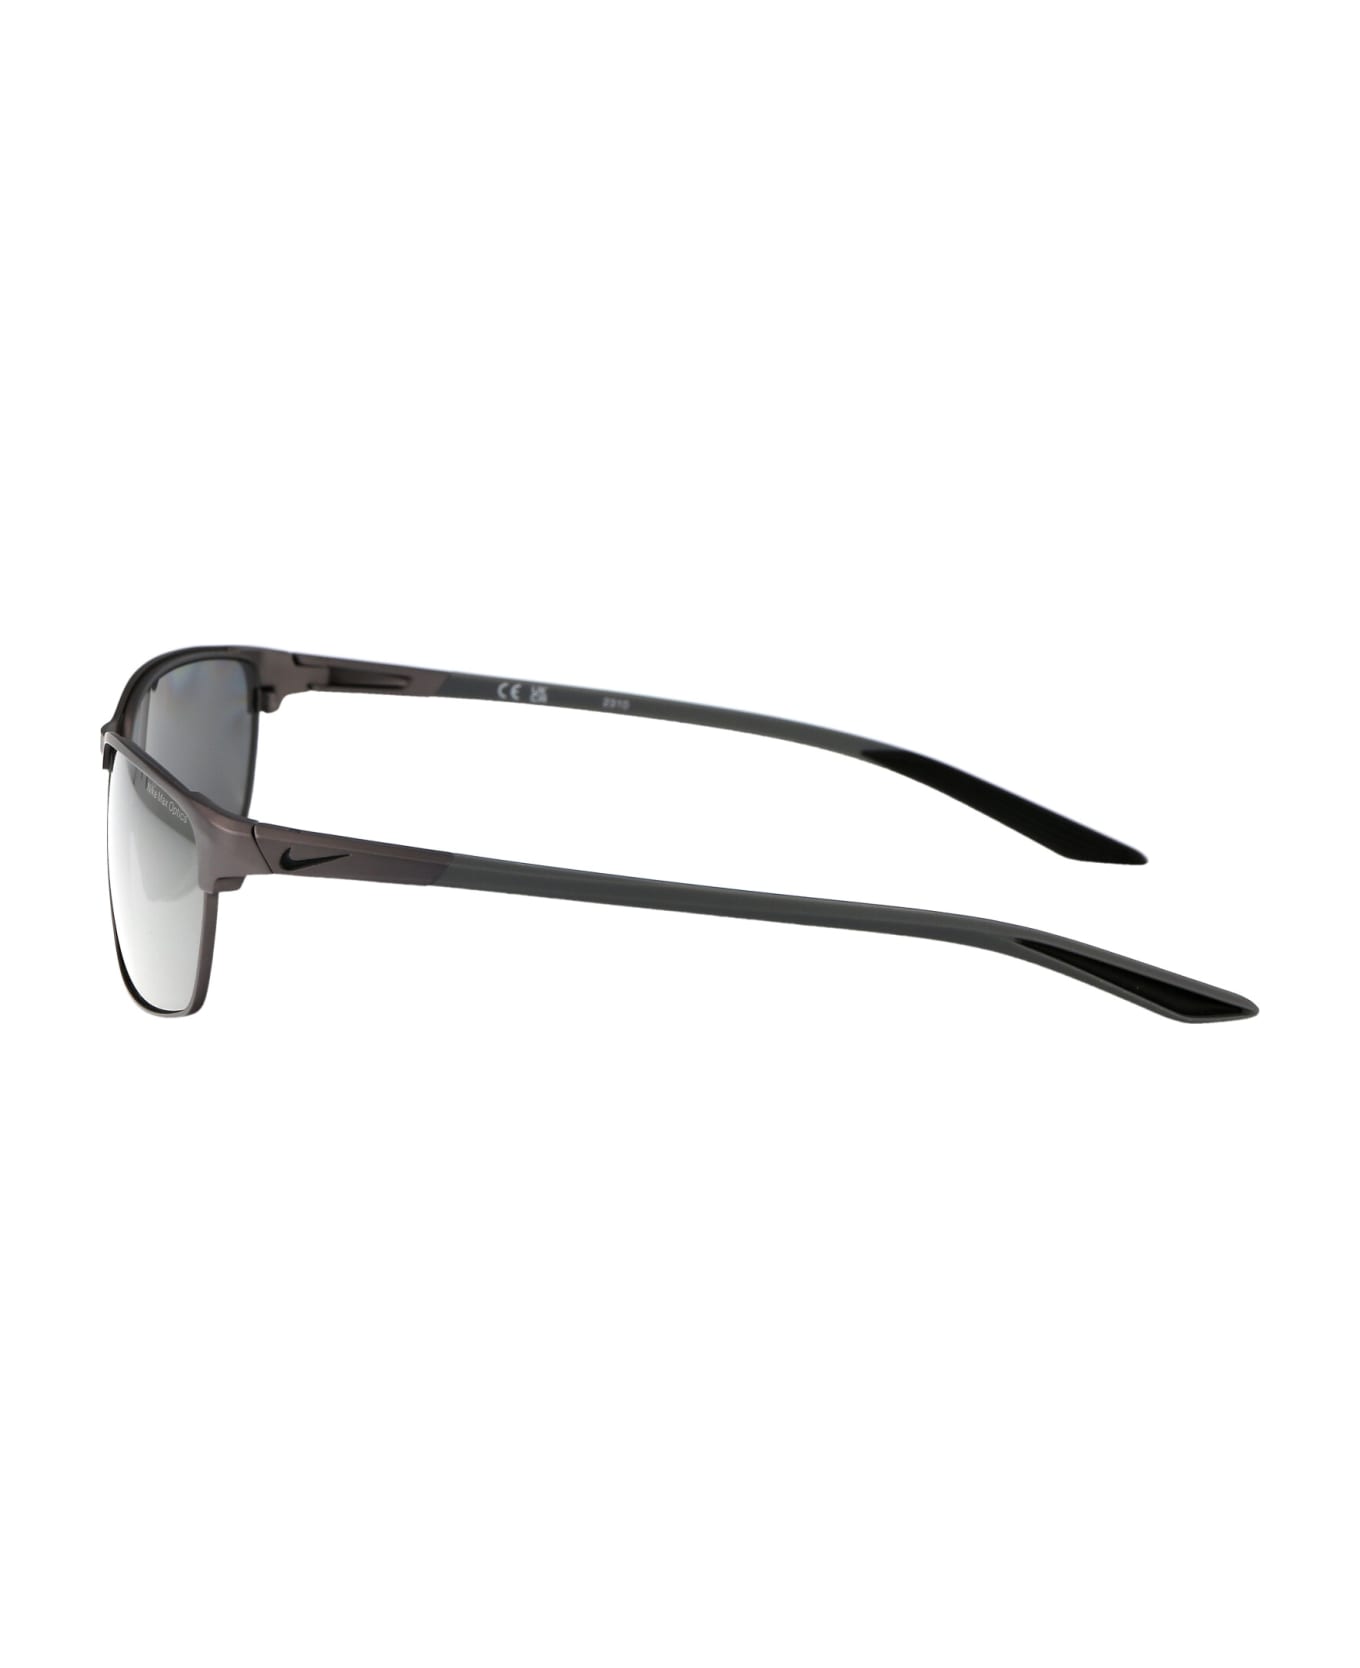 Nike Modern Metal Sunglasses - 918 GREY W/ SILVER FLASH SATIN GUNMETAL